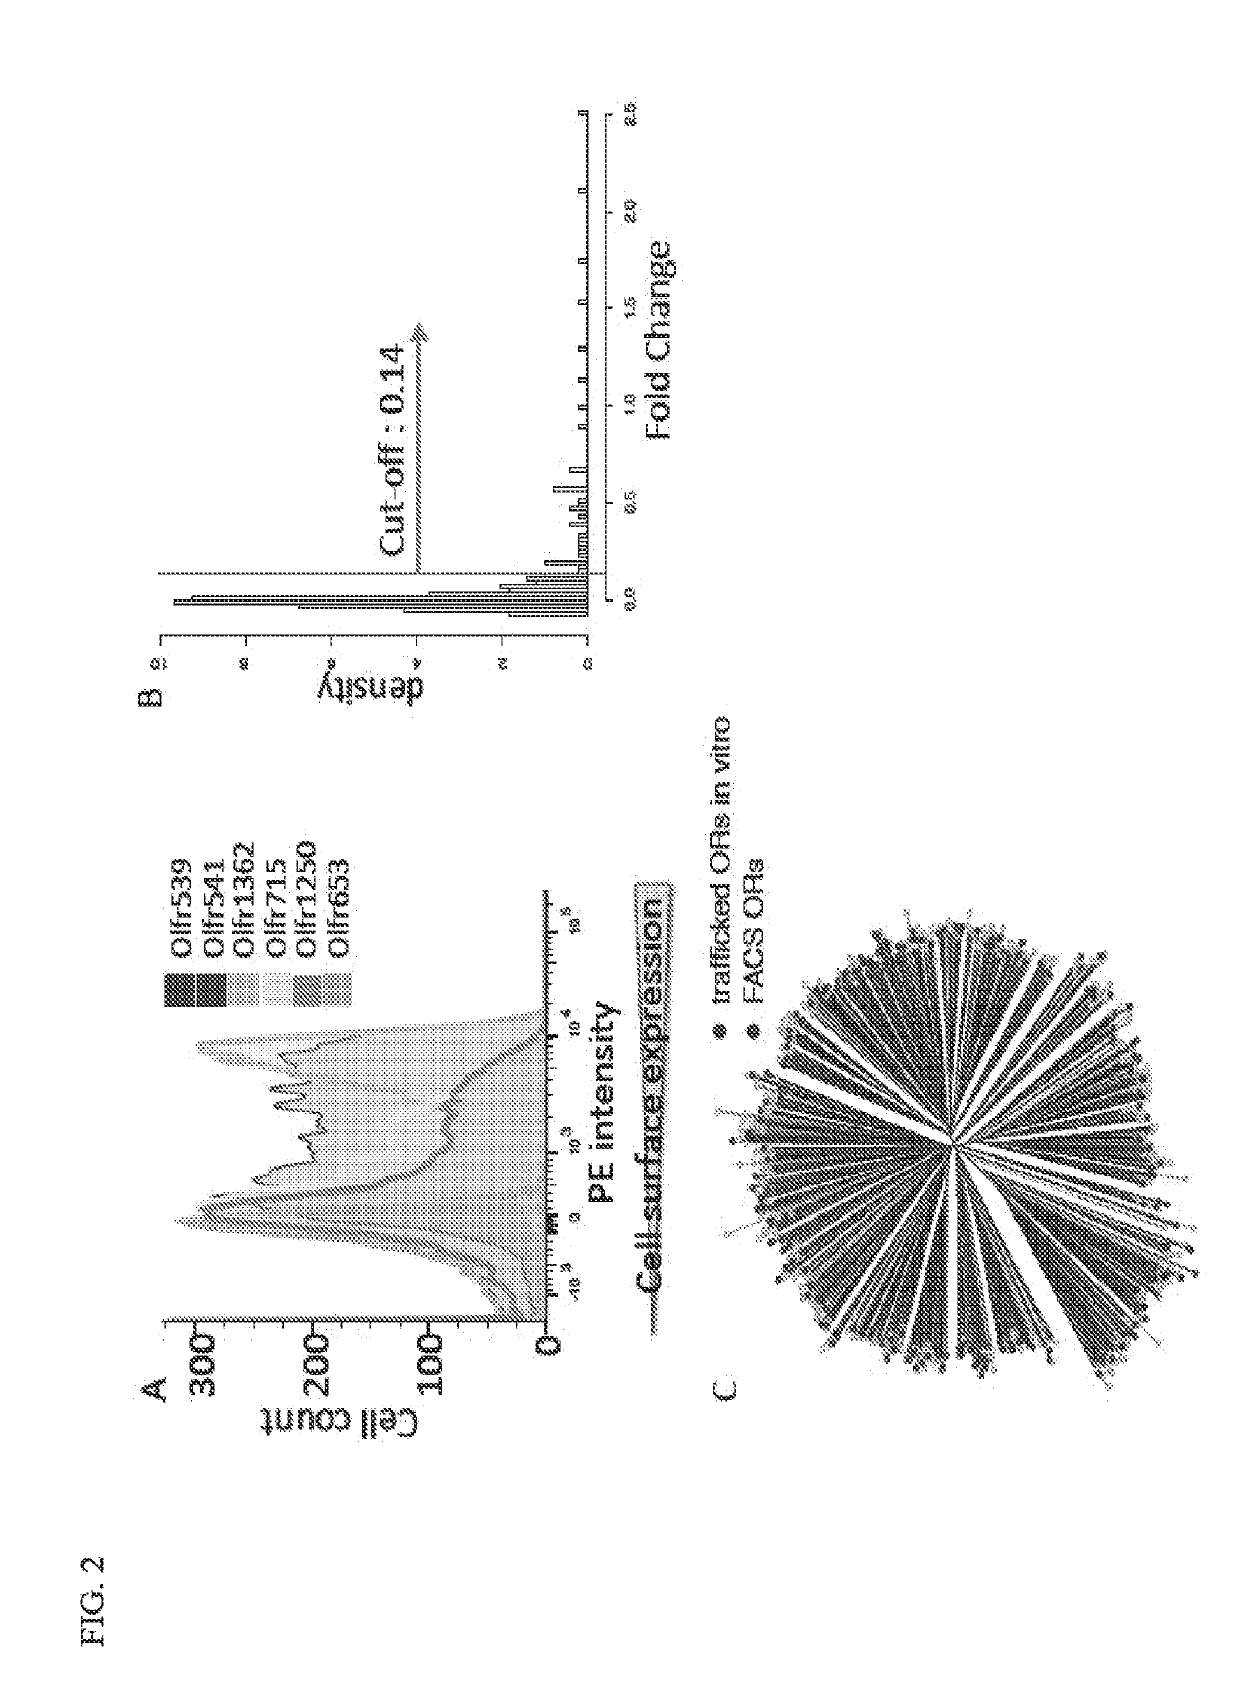 Methods for vapor detection and discrimination with mammalian odorant receptors expressed in heterologous cells